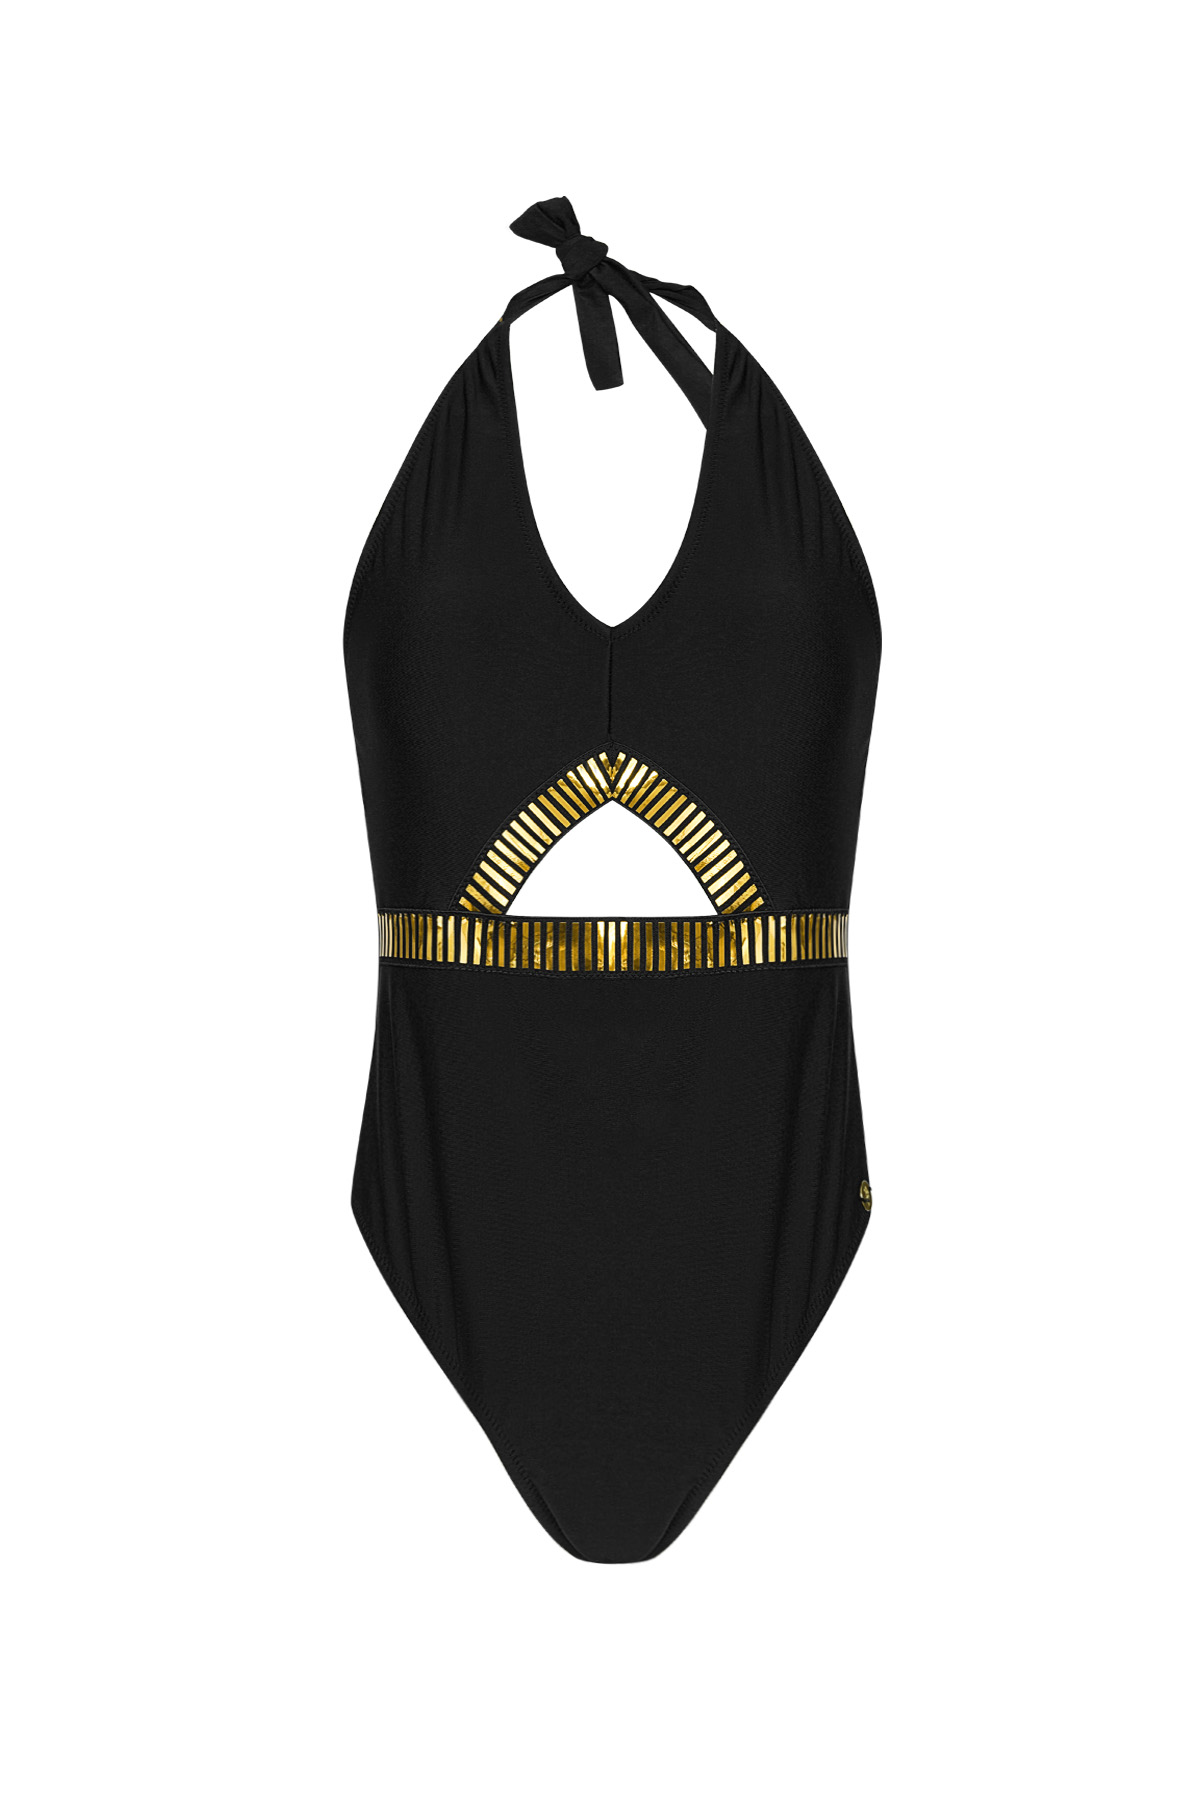 Swimsuit gold stripes - black L h5 